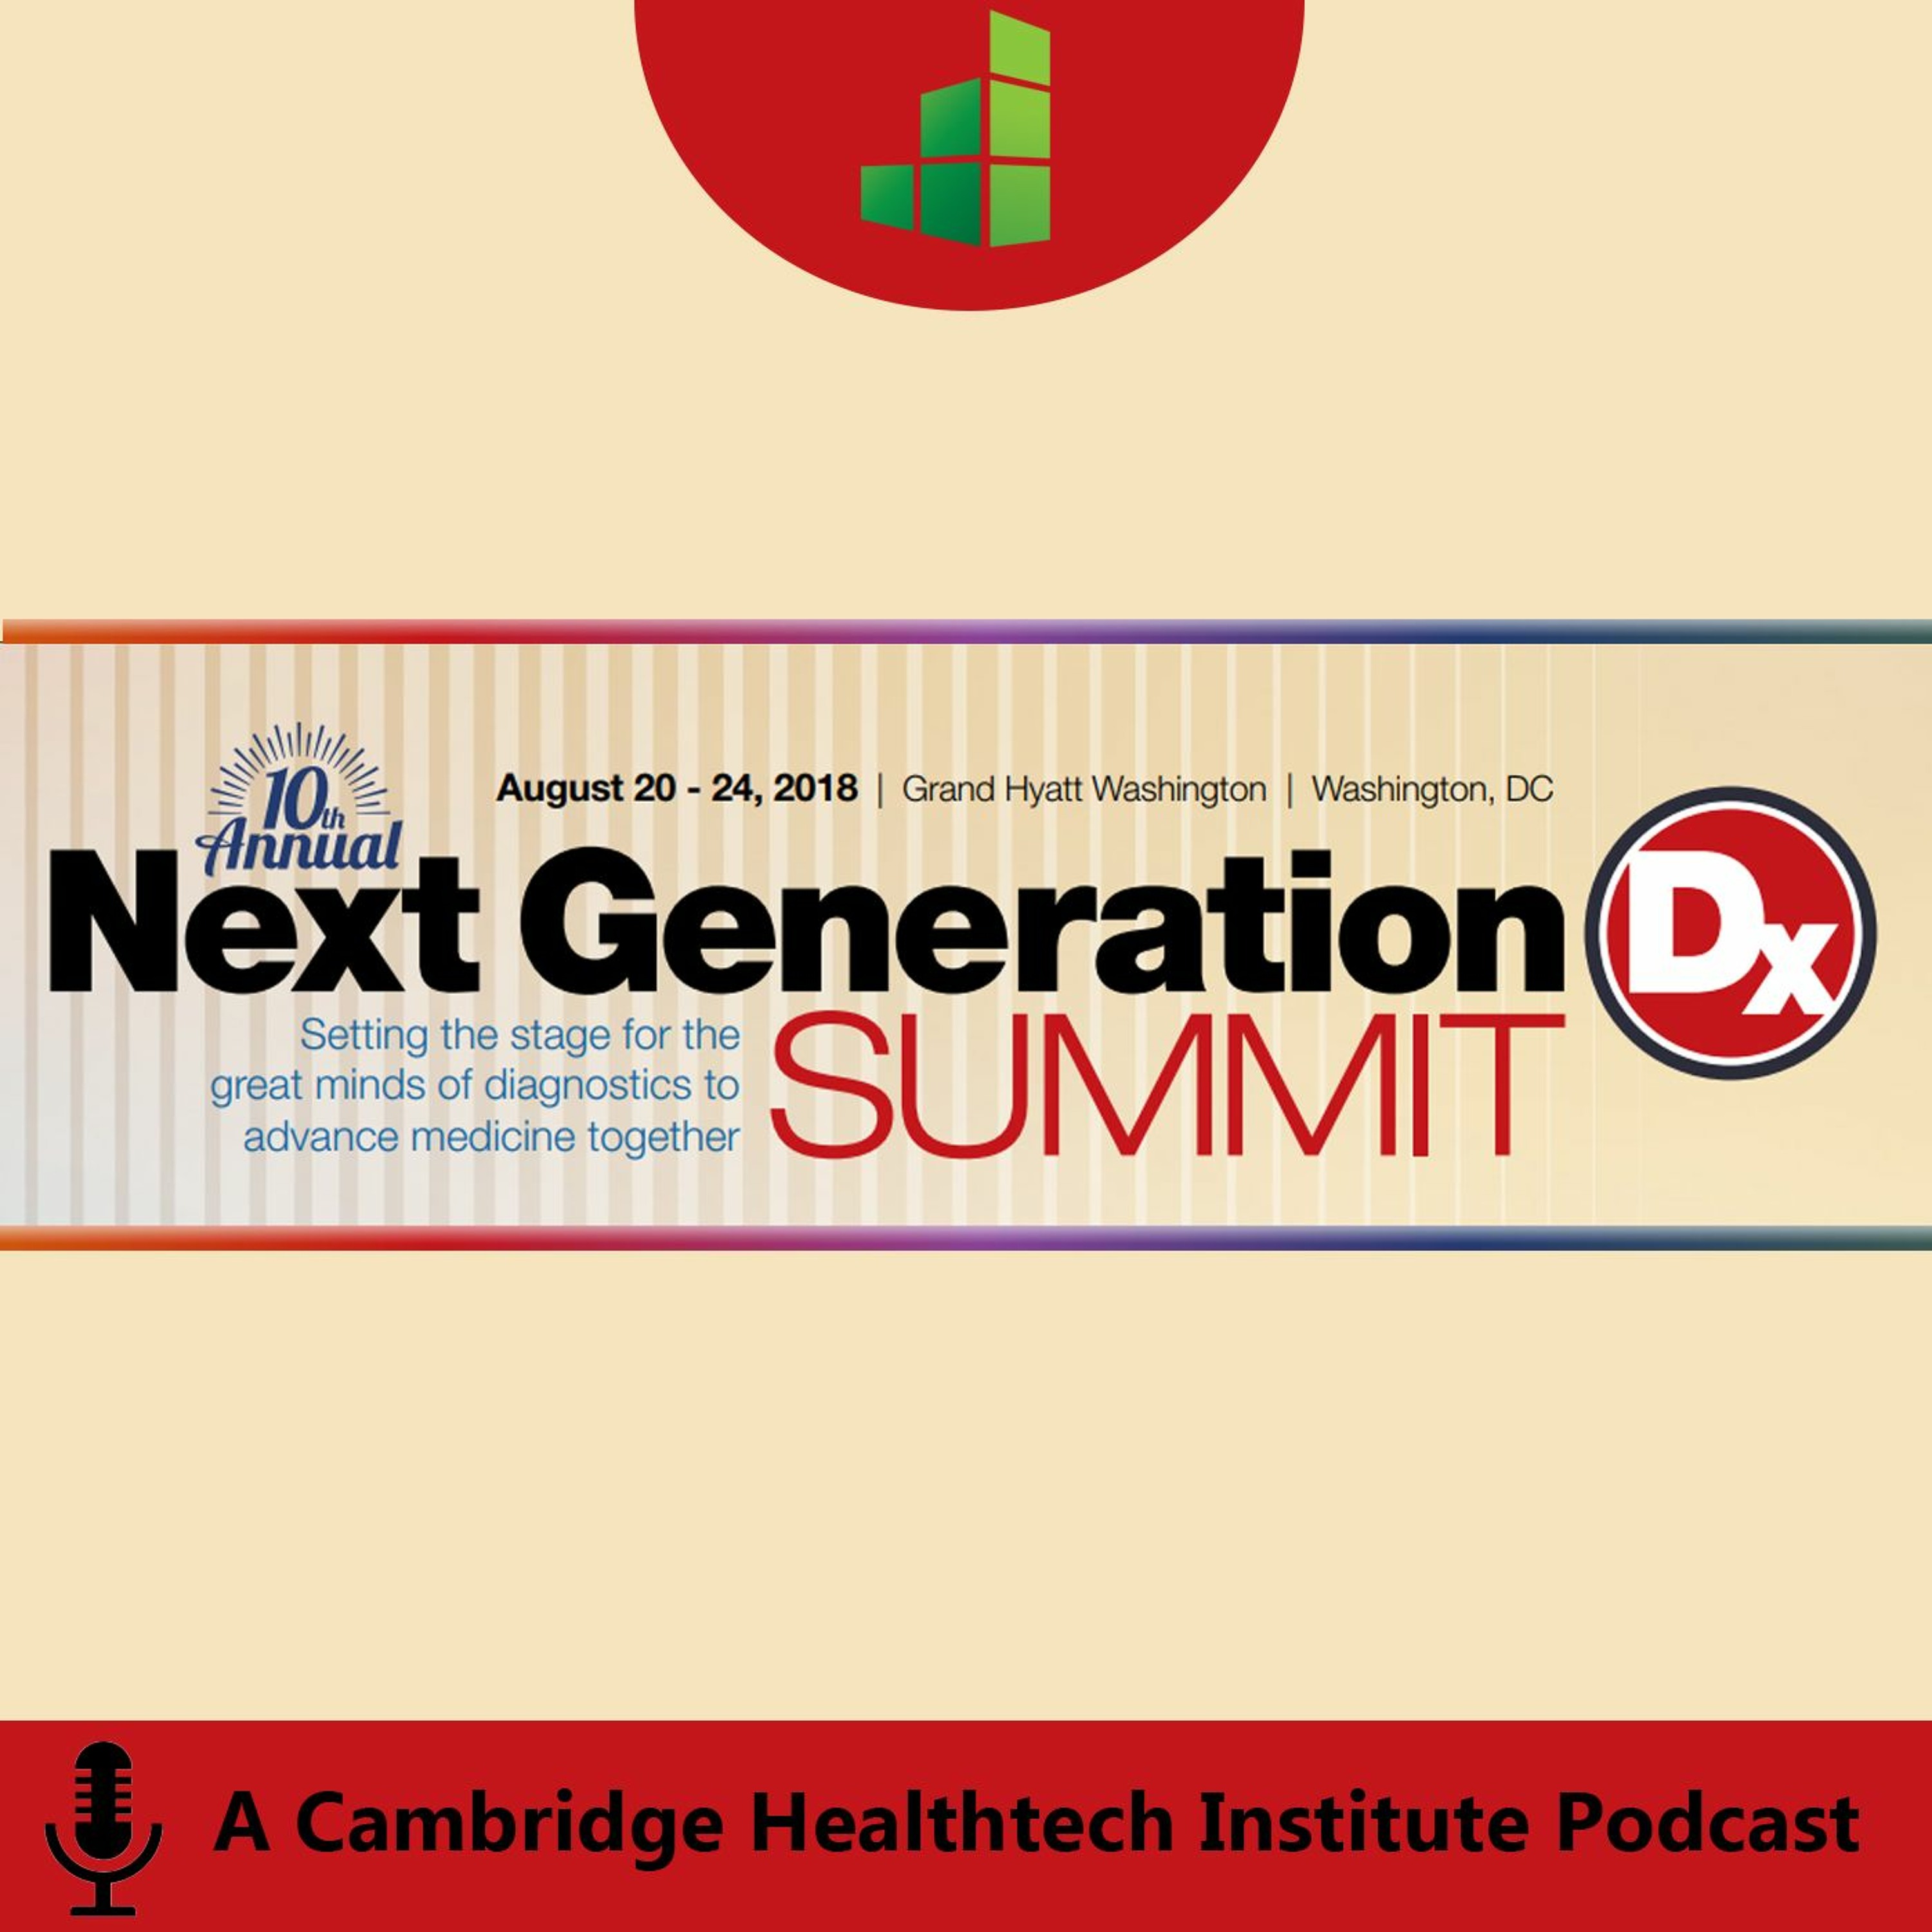 Next Generation Dx Summit 2018 | Molecular Diagnostics in Precision Medicine and Healthcare